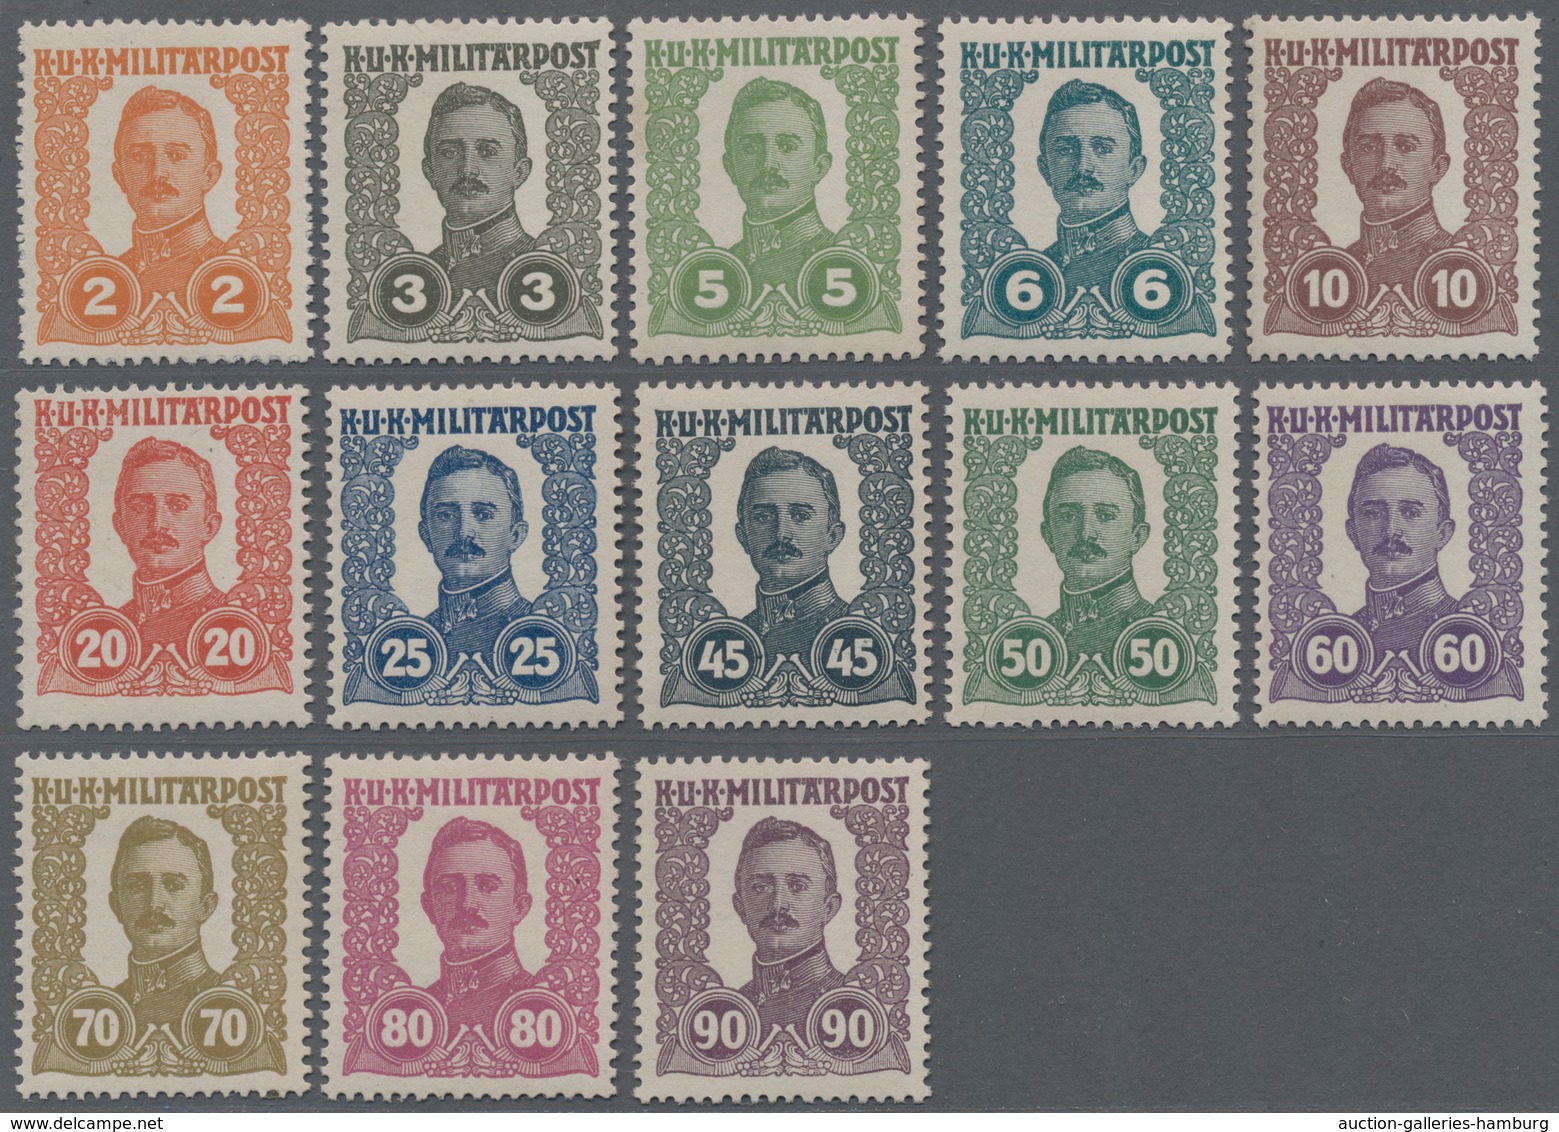 Bosnien Und Herzegowina (Österreich 1879/1918): 1918, Not Issued, Complete Set Of 13 Values, Mint Ne - Bosnia Herzegovina